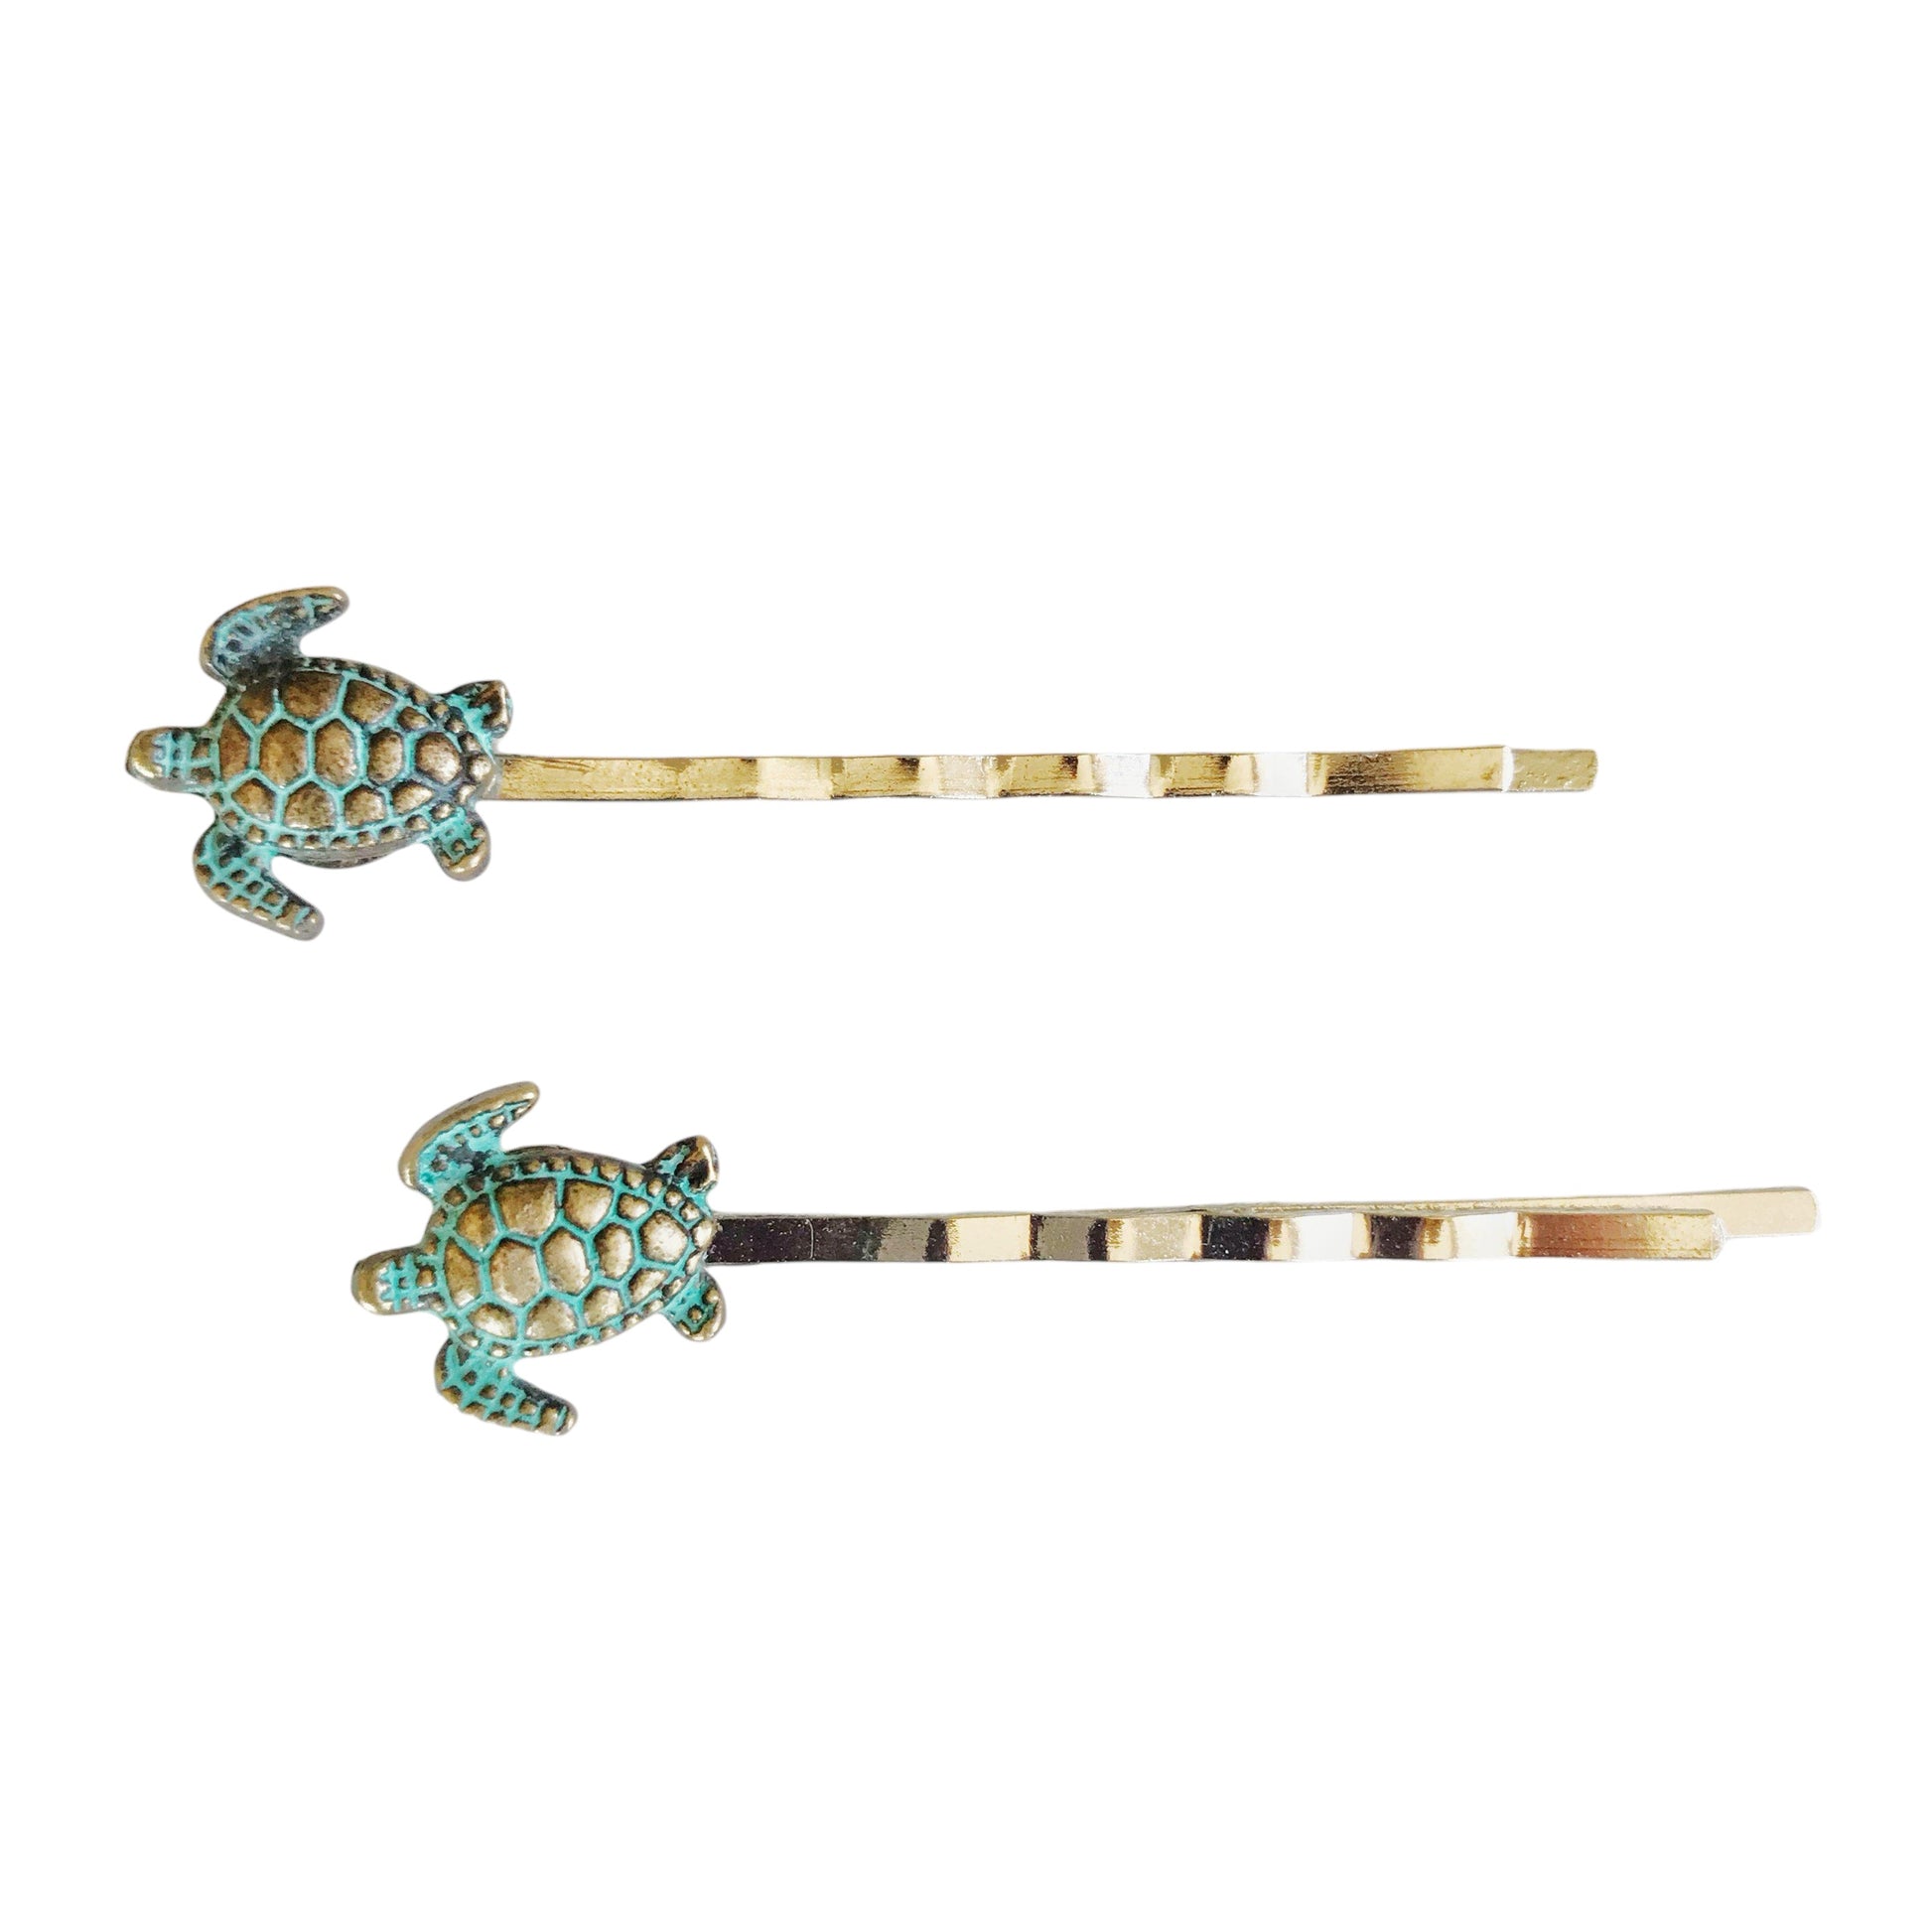 Patina Turtle Hair Pins: Stylish Coastal-Inspired Accessories